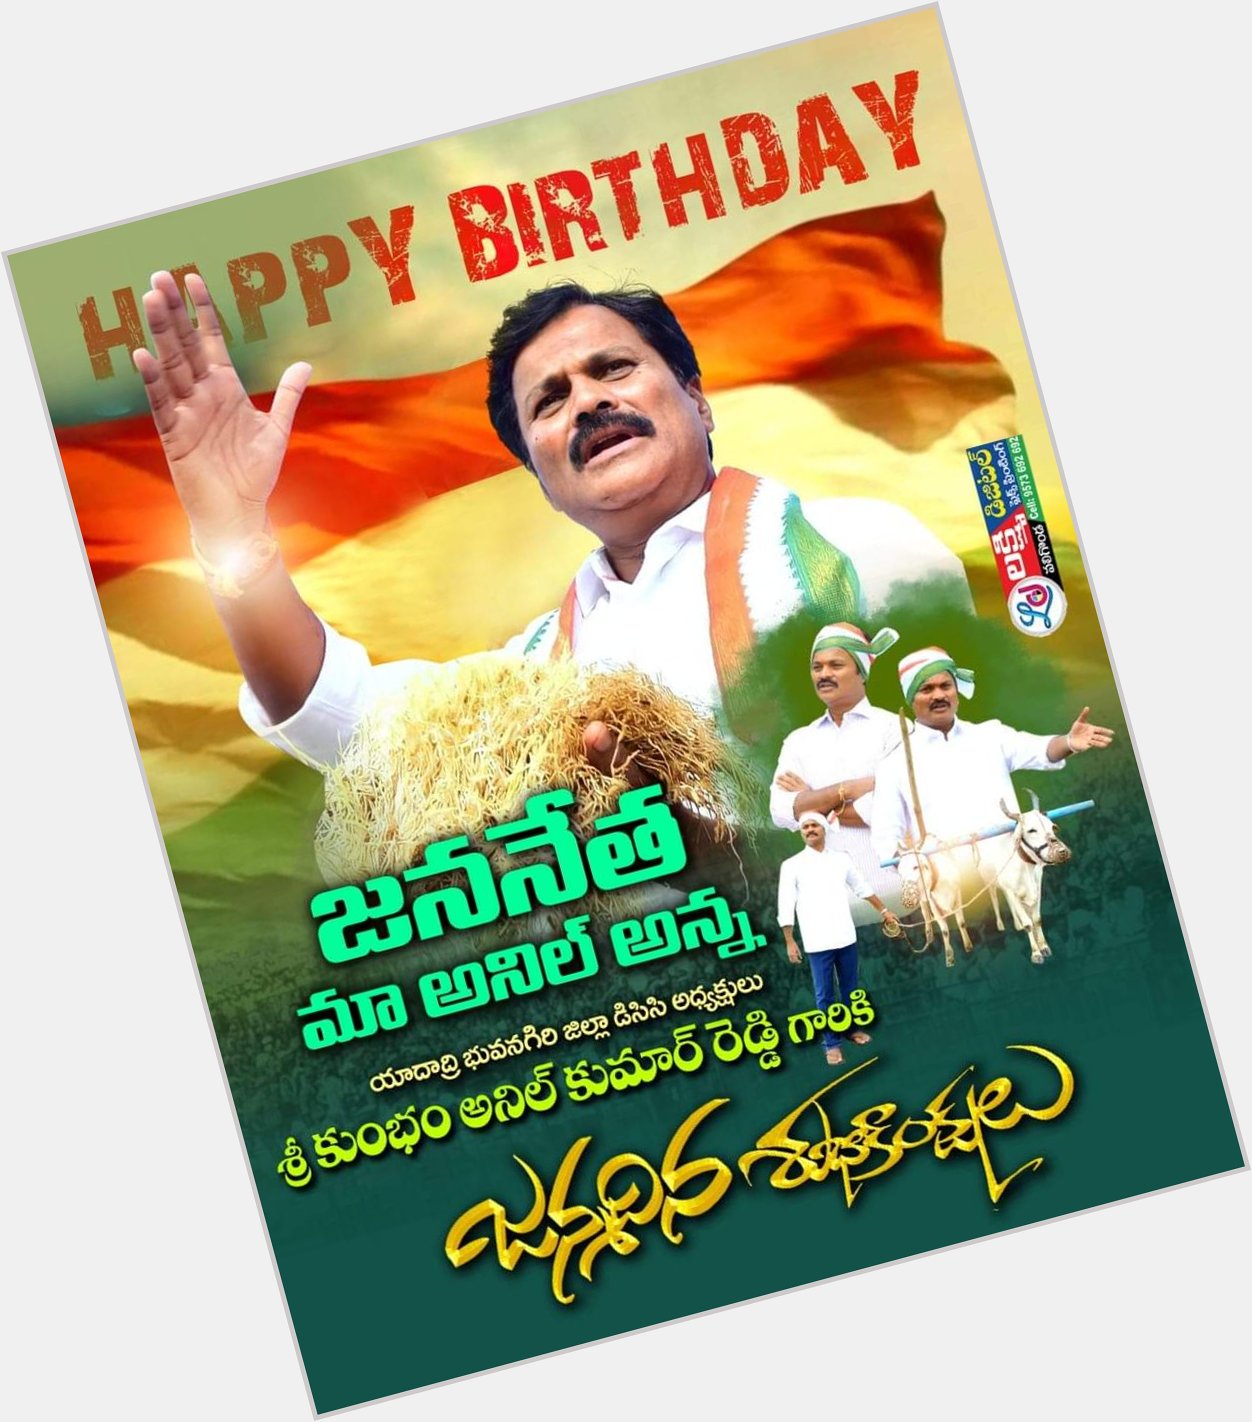 Happy Birthday To U People\s Leader Sri Anil Kumar Reddy garu   